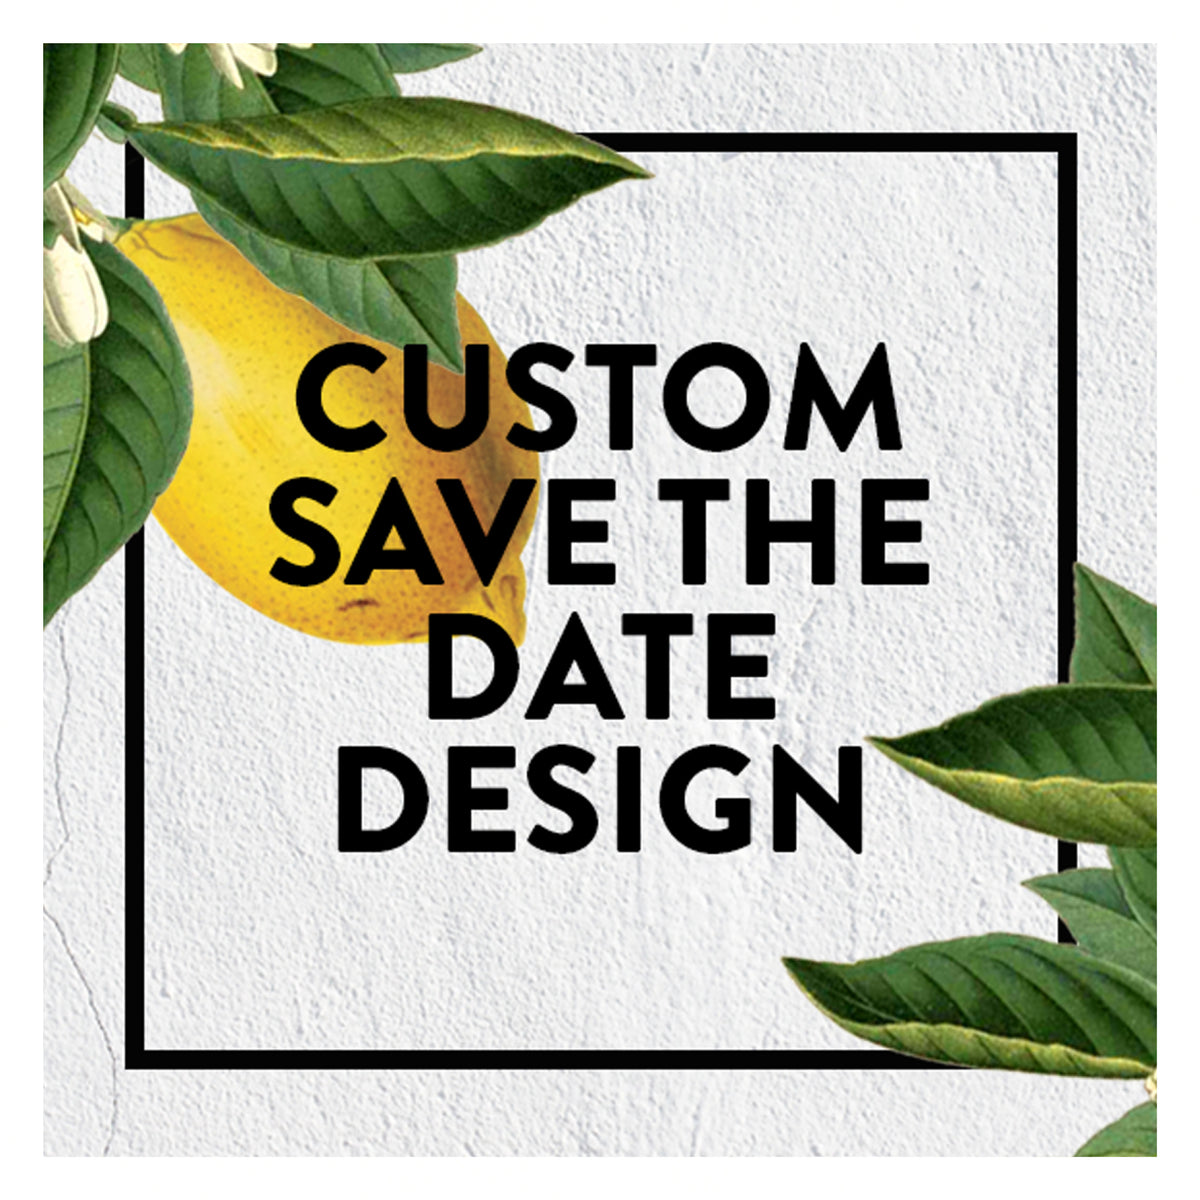 Custom Save the Date Design